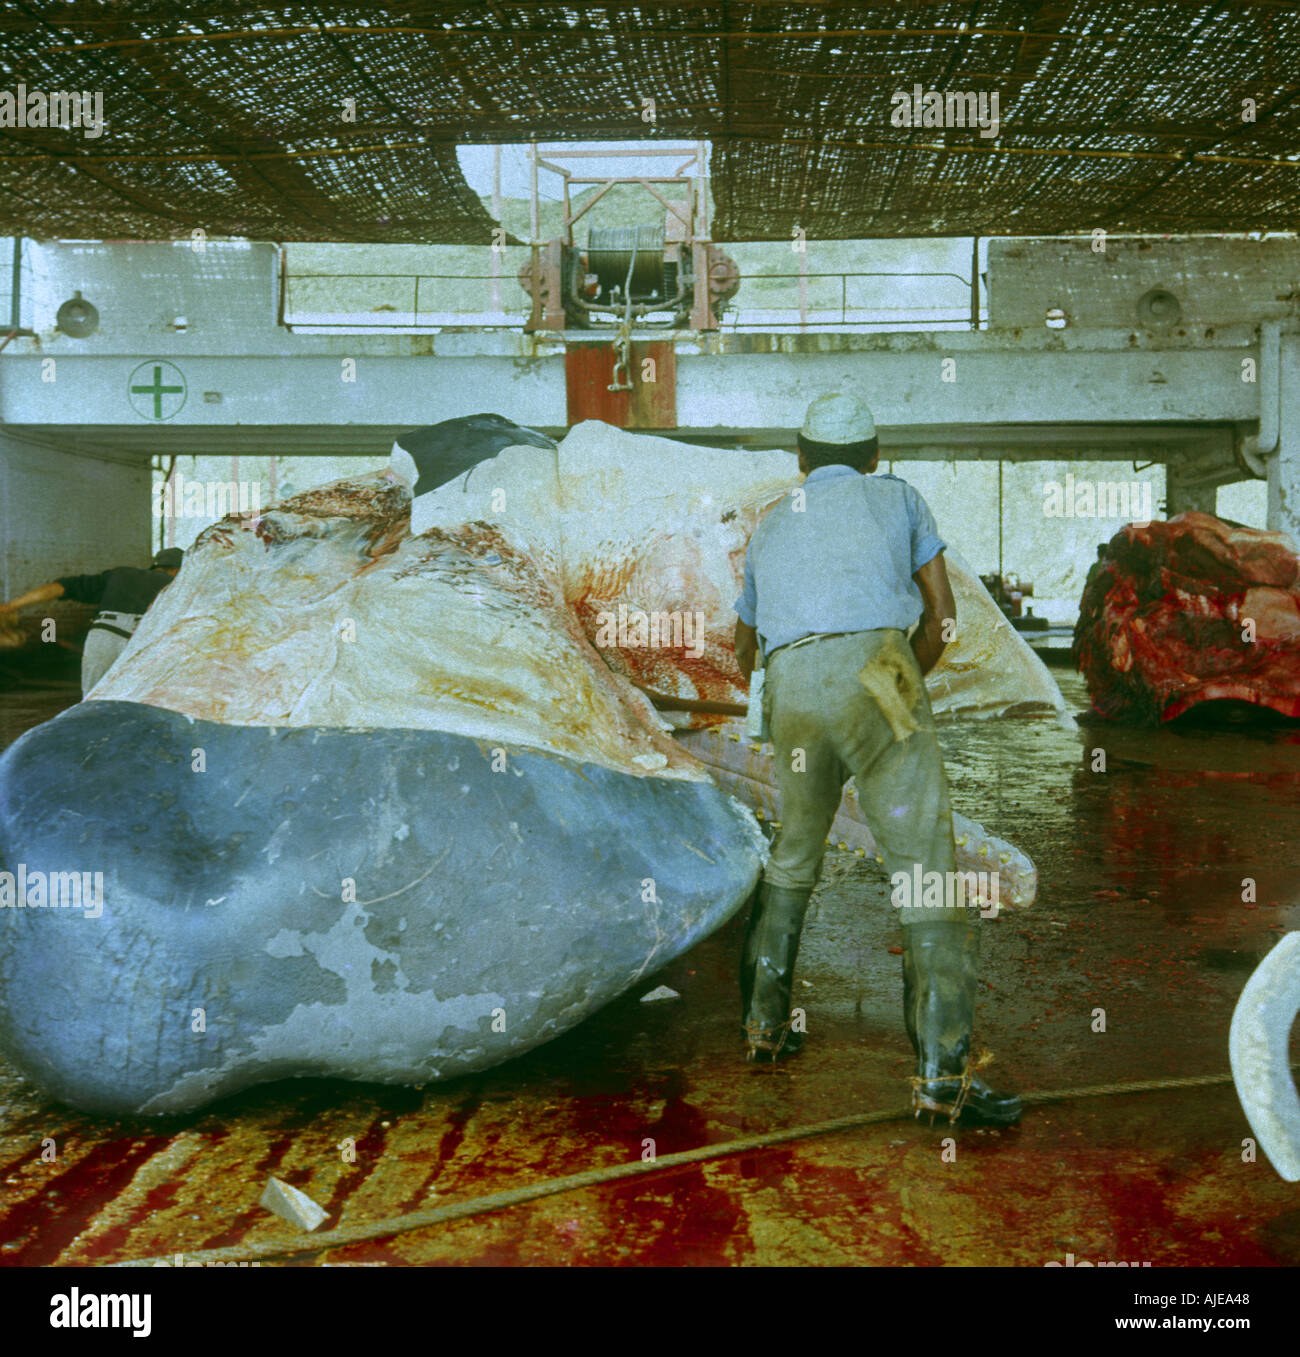 Peru whaling factory in Paita closed late 1960s Image taken in 1968 Stock Photo